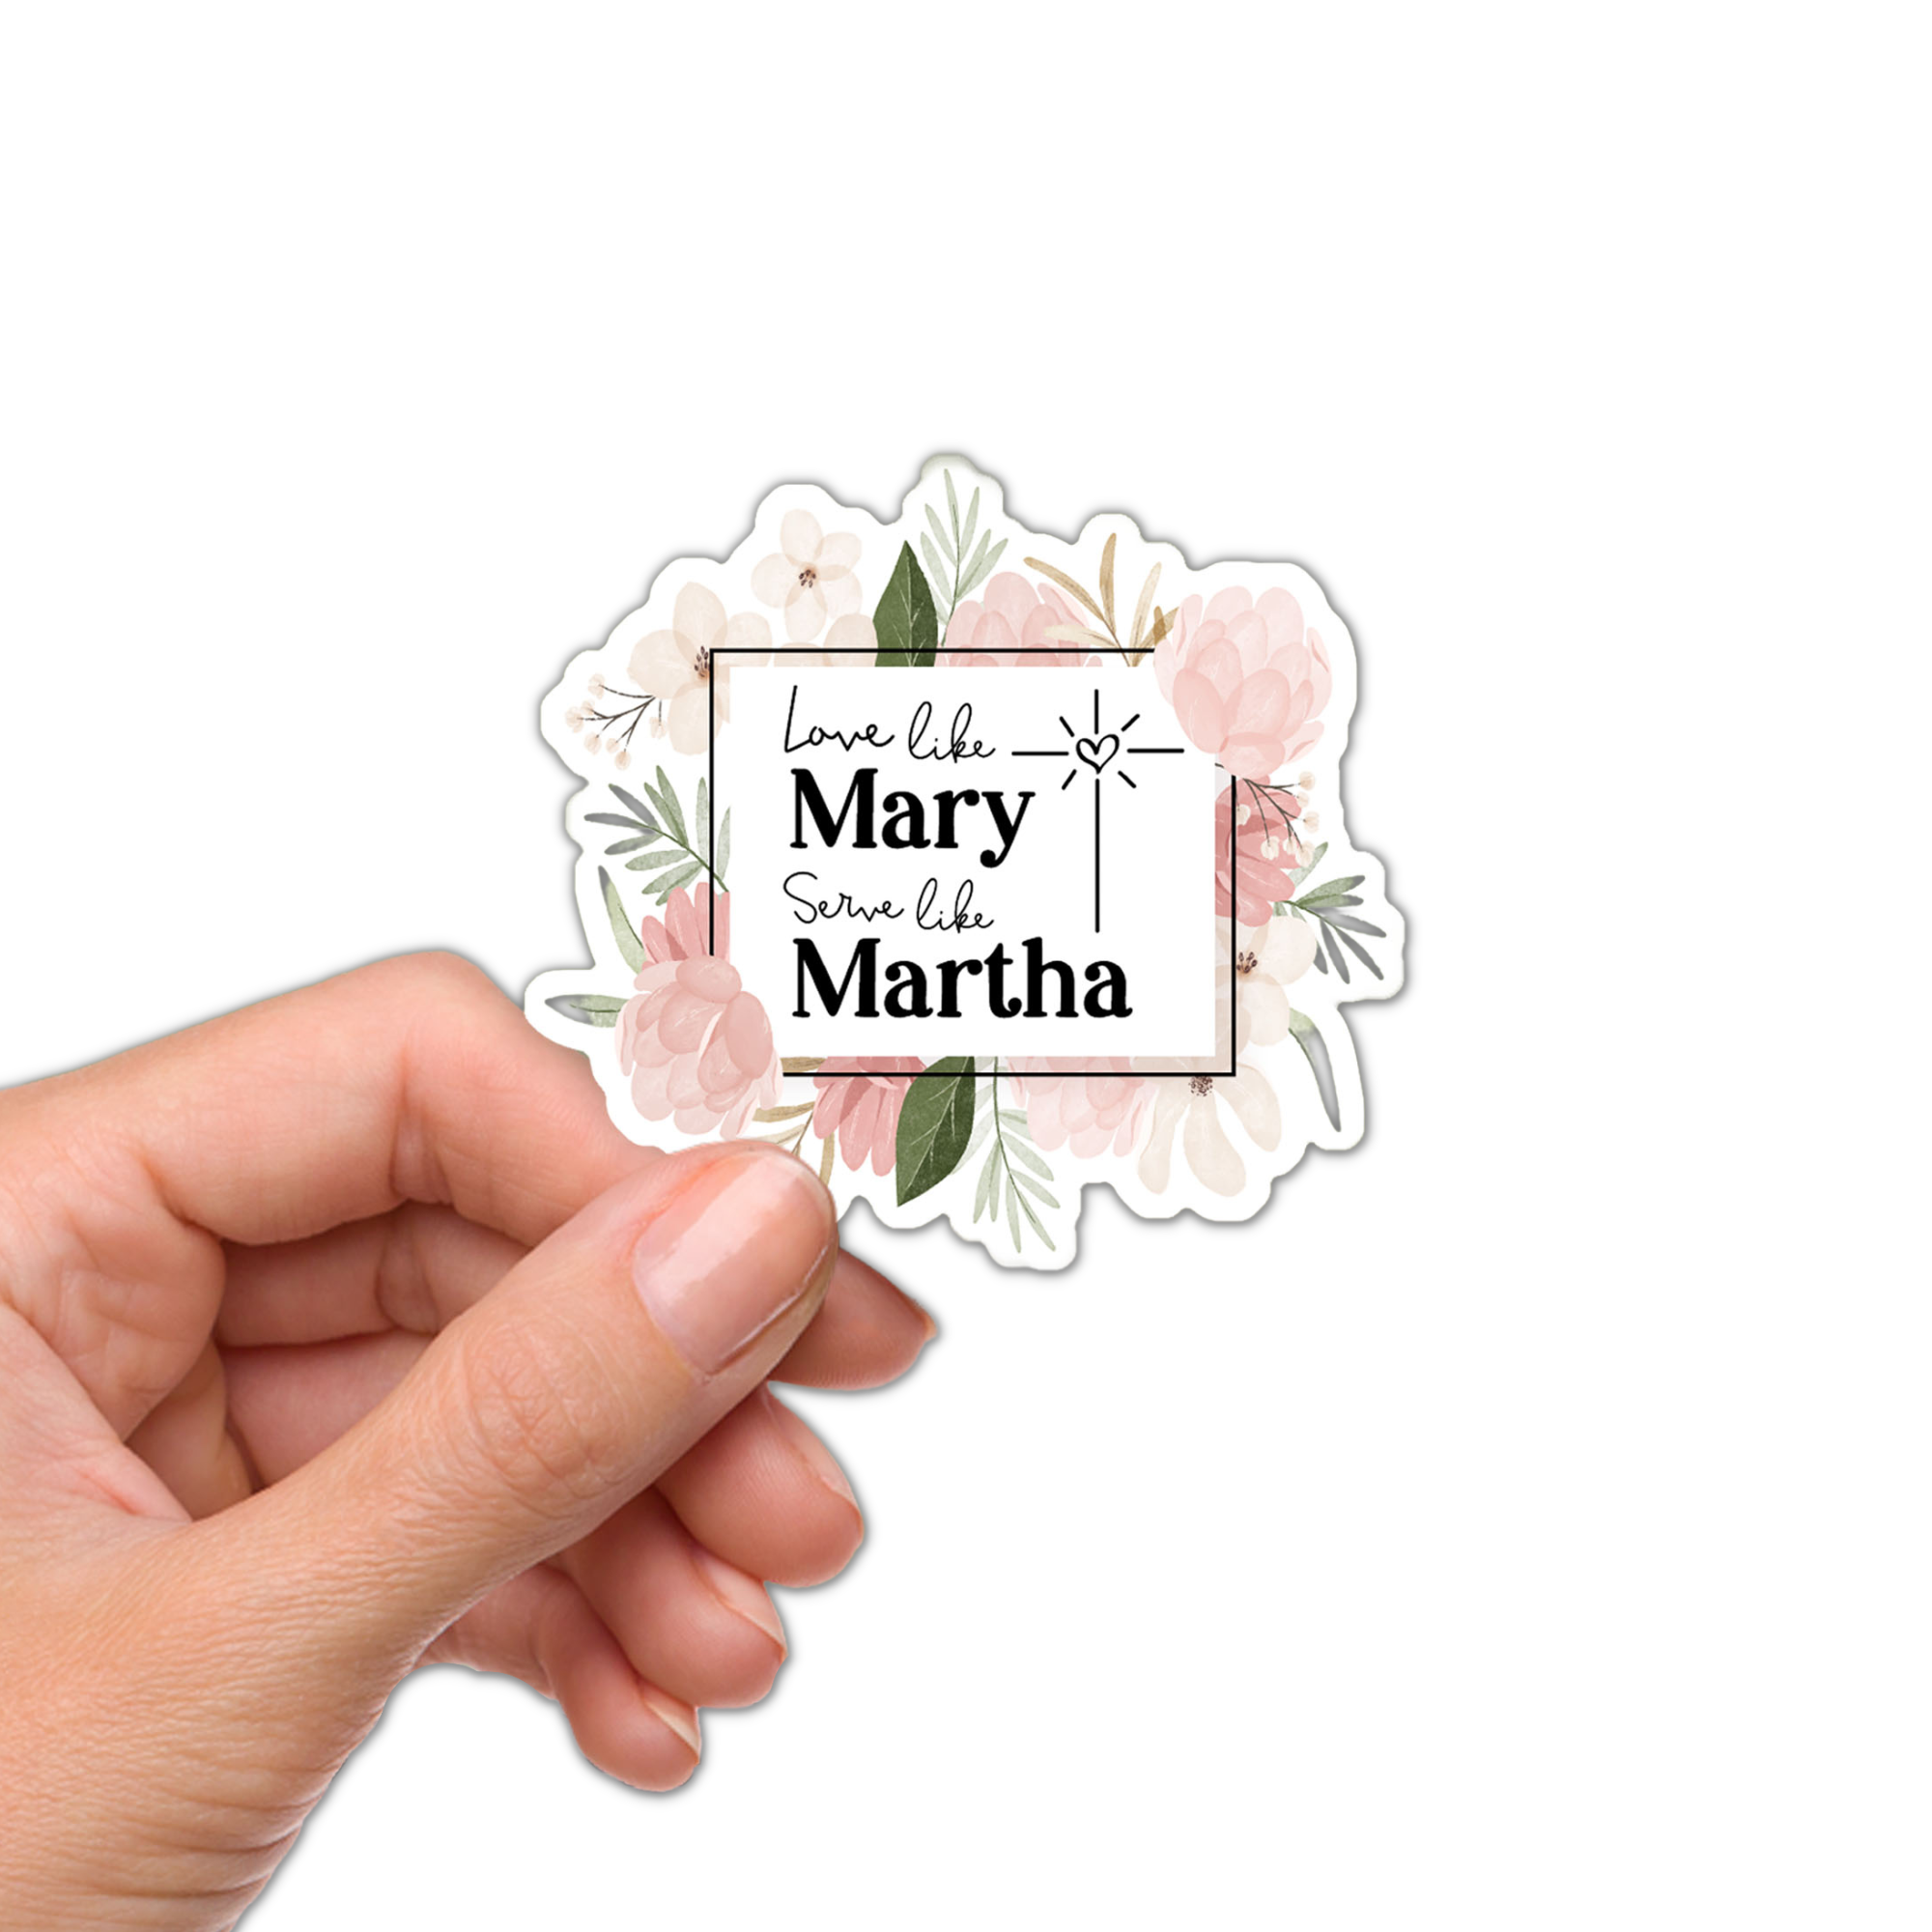 Love Like Mary, Serve Like Martha Christian Vinyl Waterproof Sticker